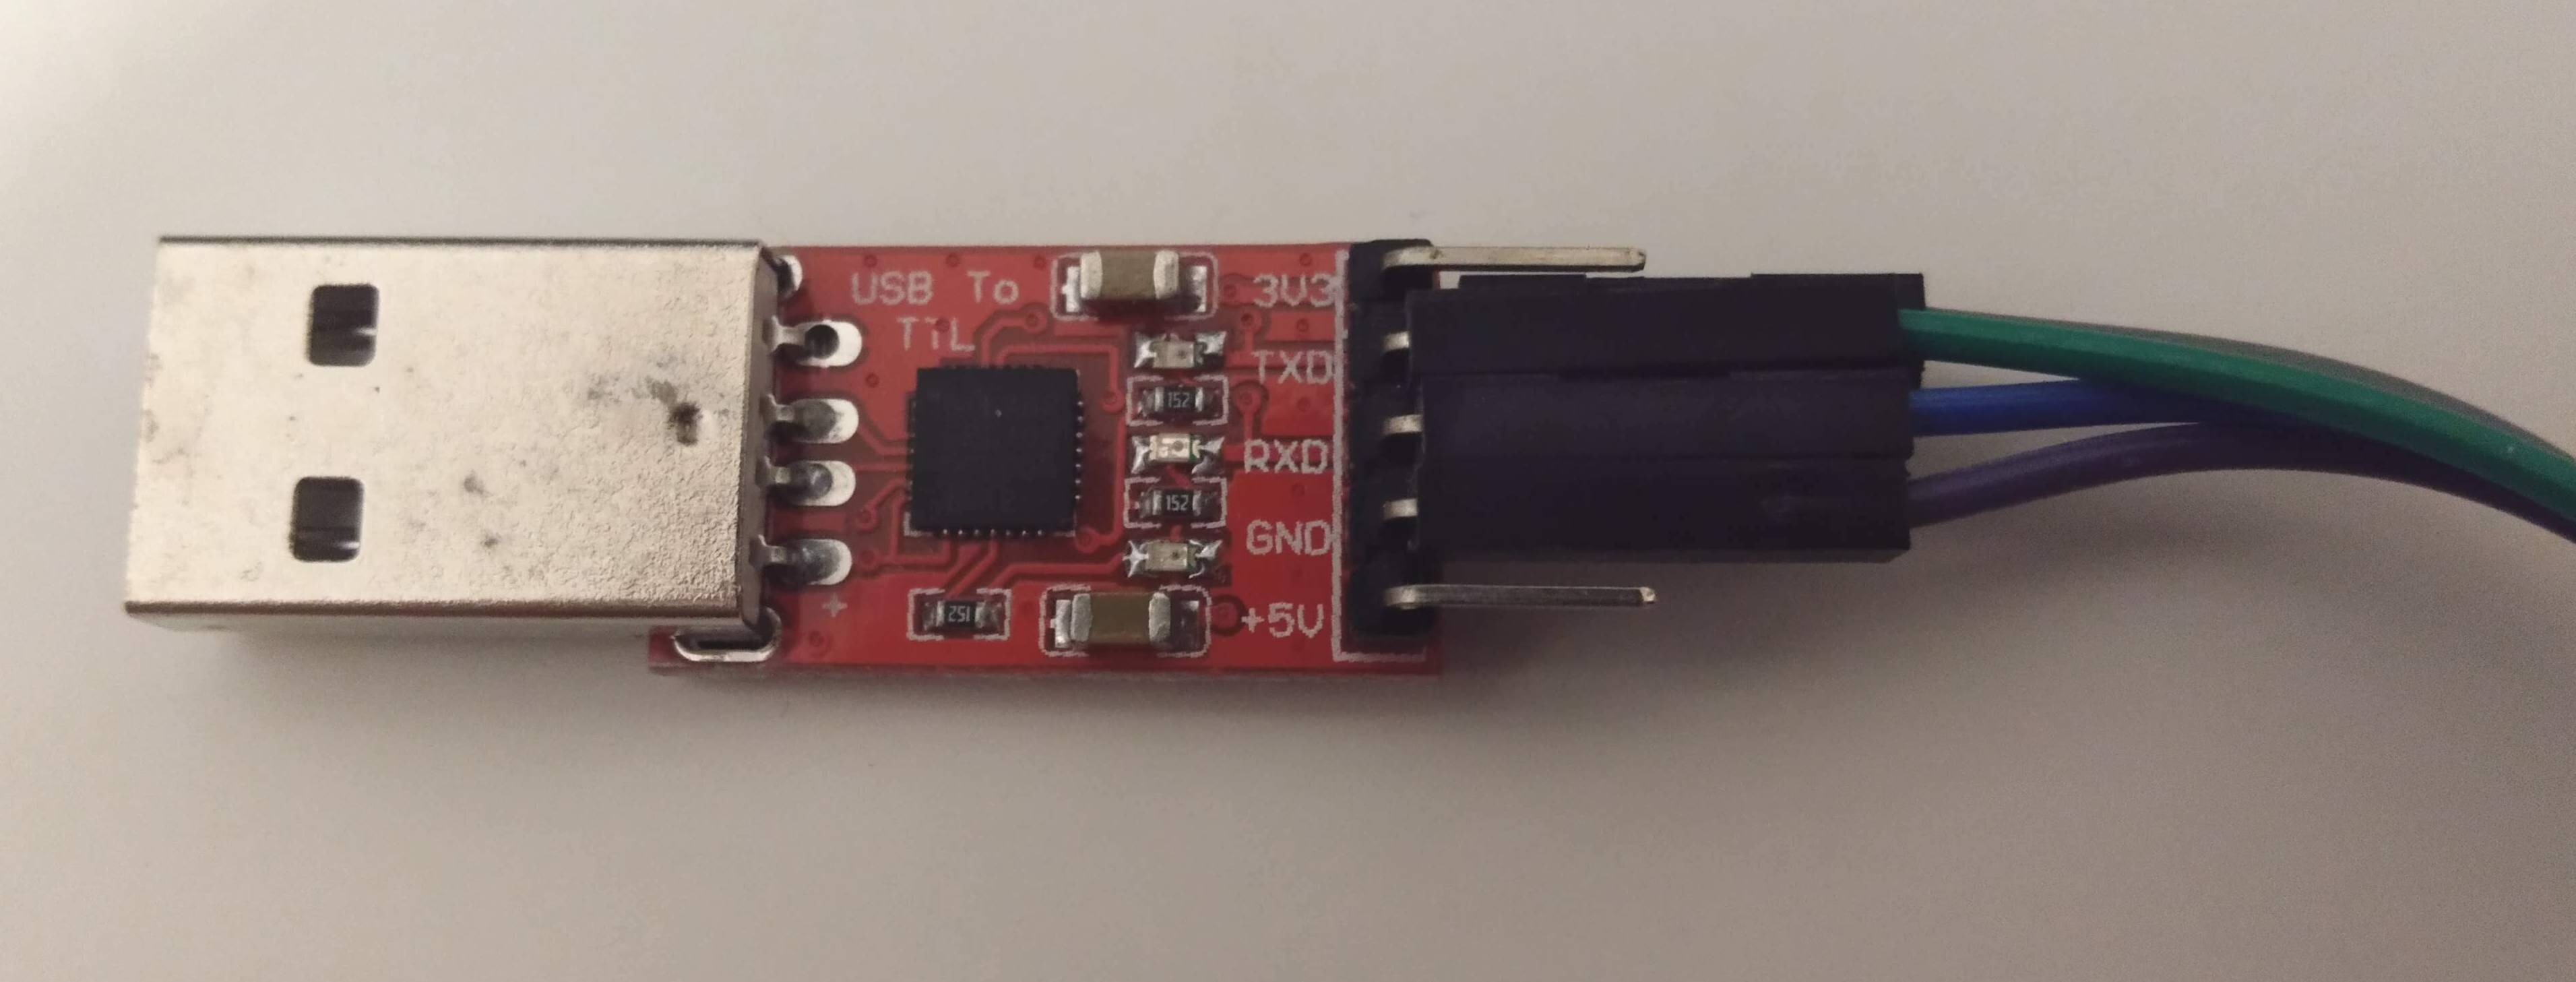 USB TTL serieller Adapter mit Chipsatz CP2102